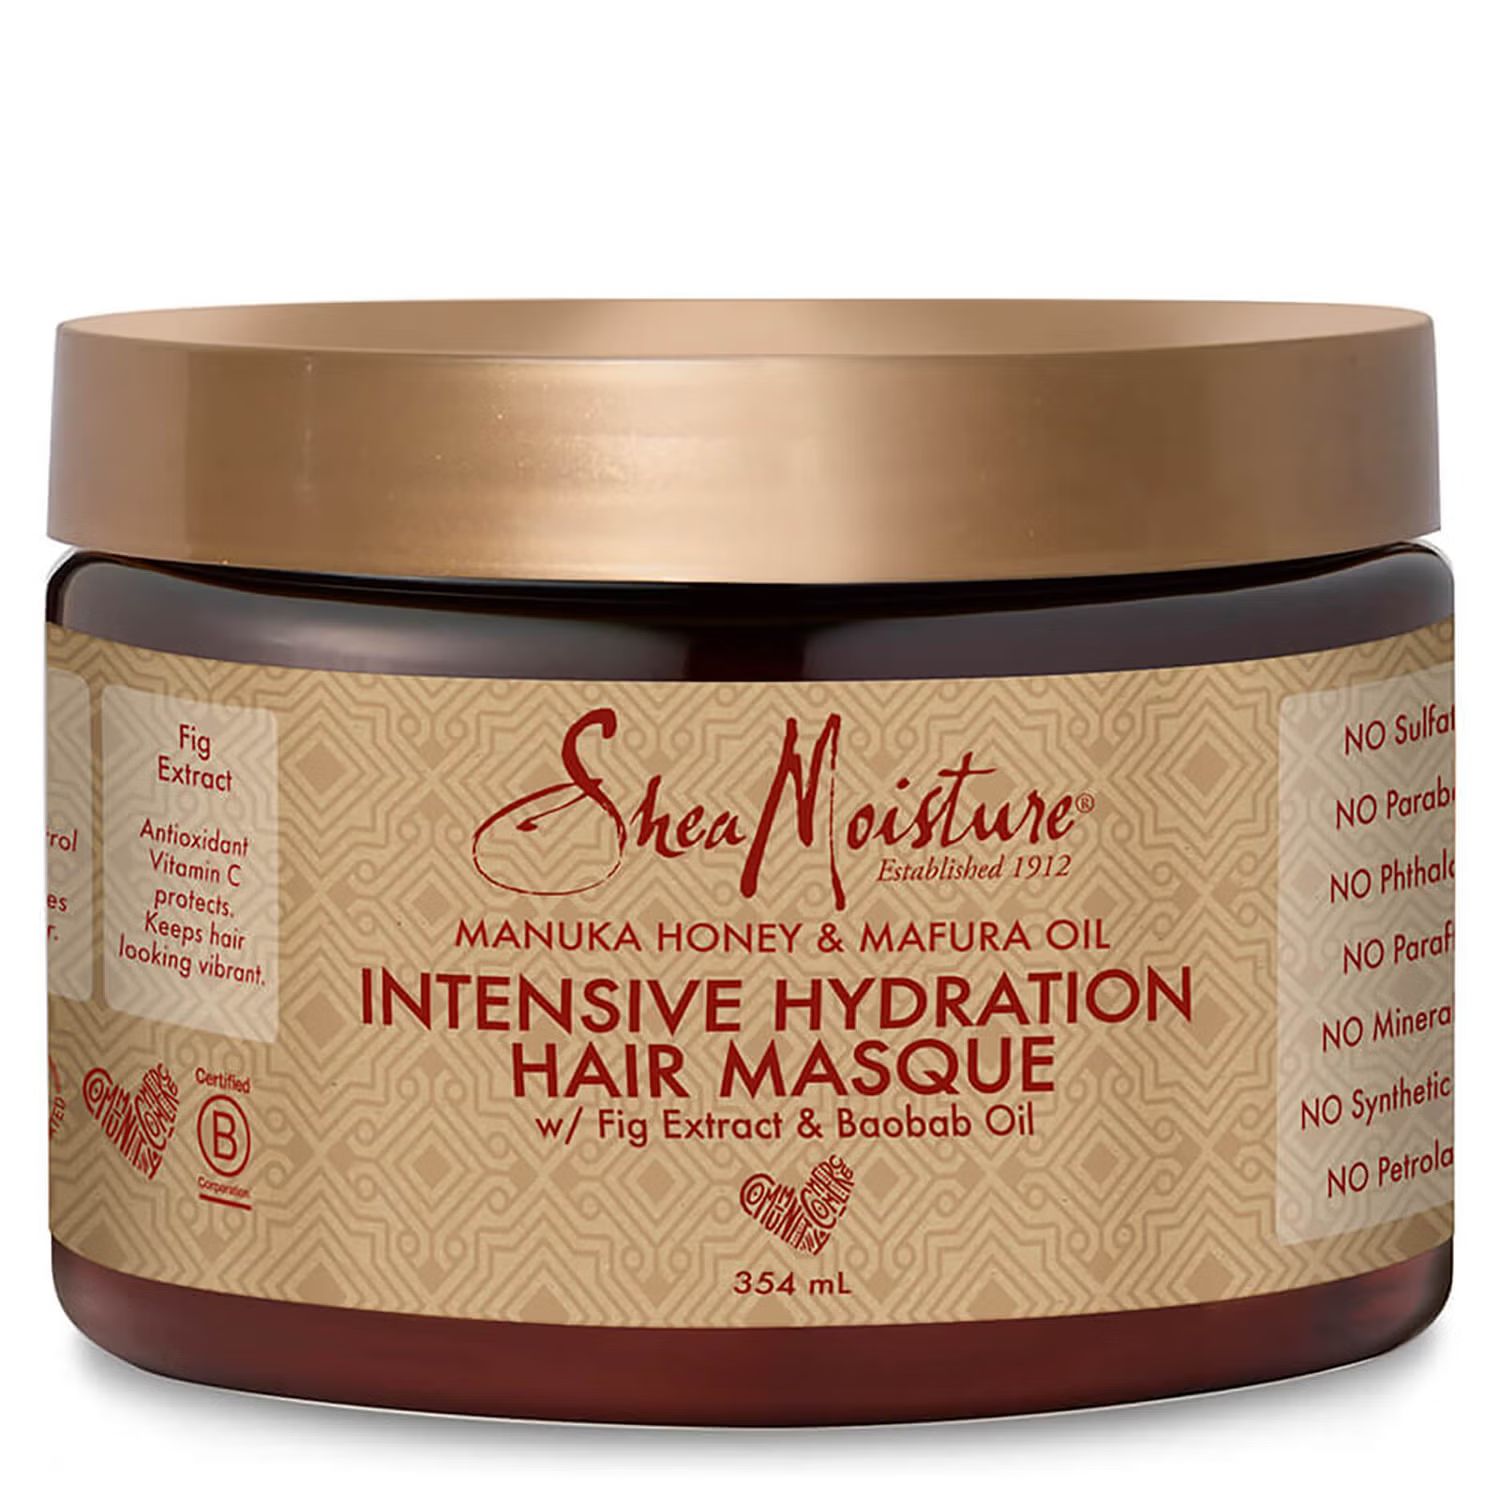 Shea Moisture Manuka Honey & Mafura Oil Intensive Hydration Hair Masque 354ml | Look Fantastic (ROW)